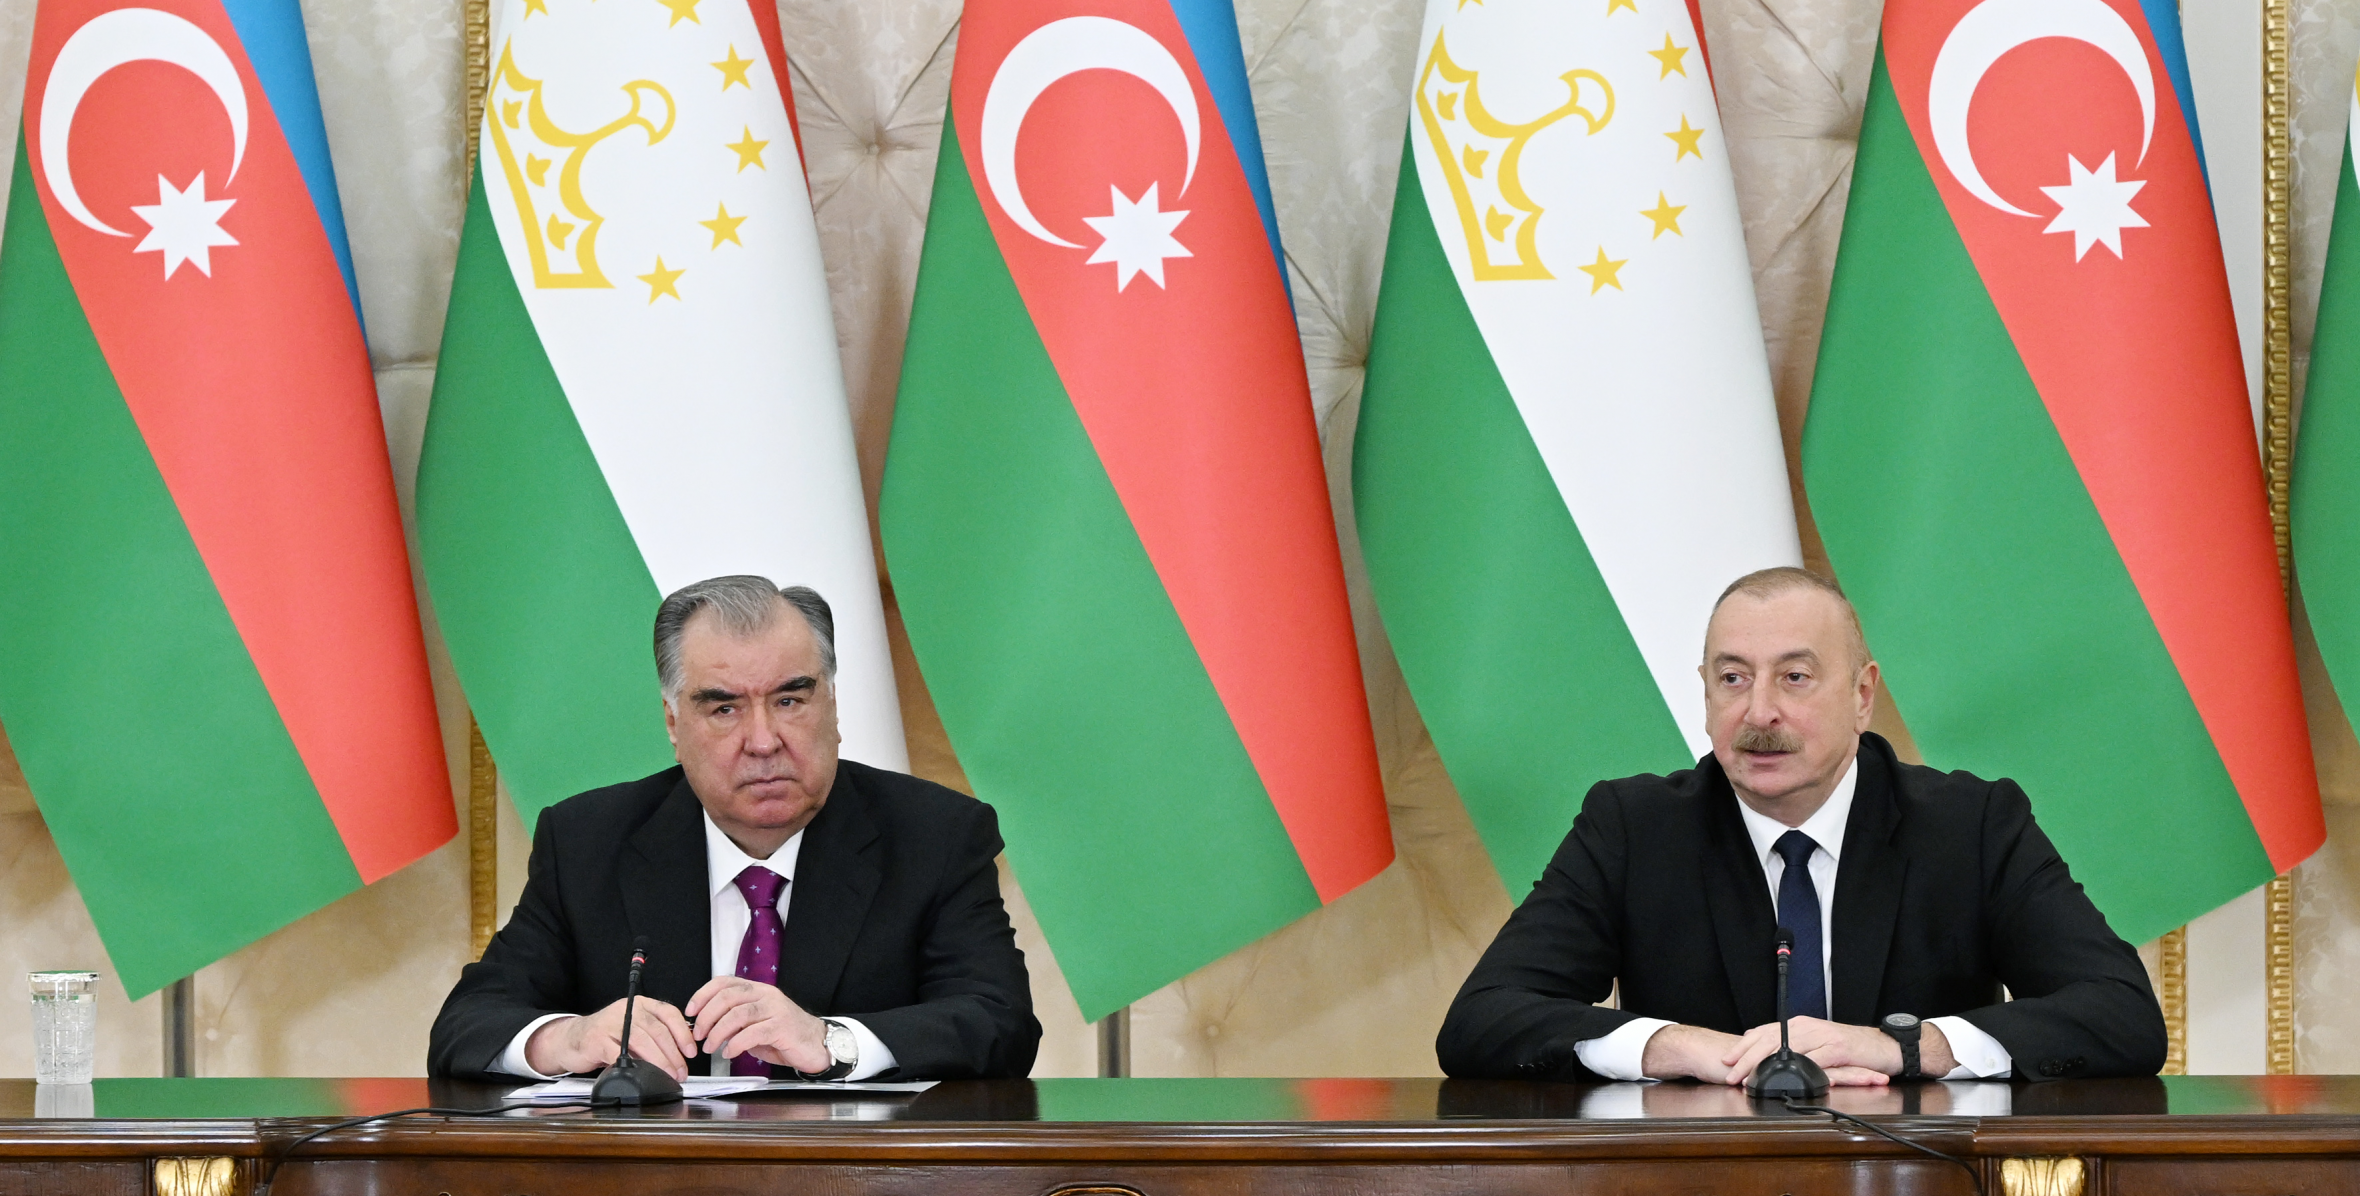 Presidents of Azerbaijan and Tajikistan made press statements